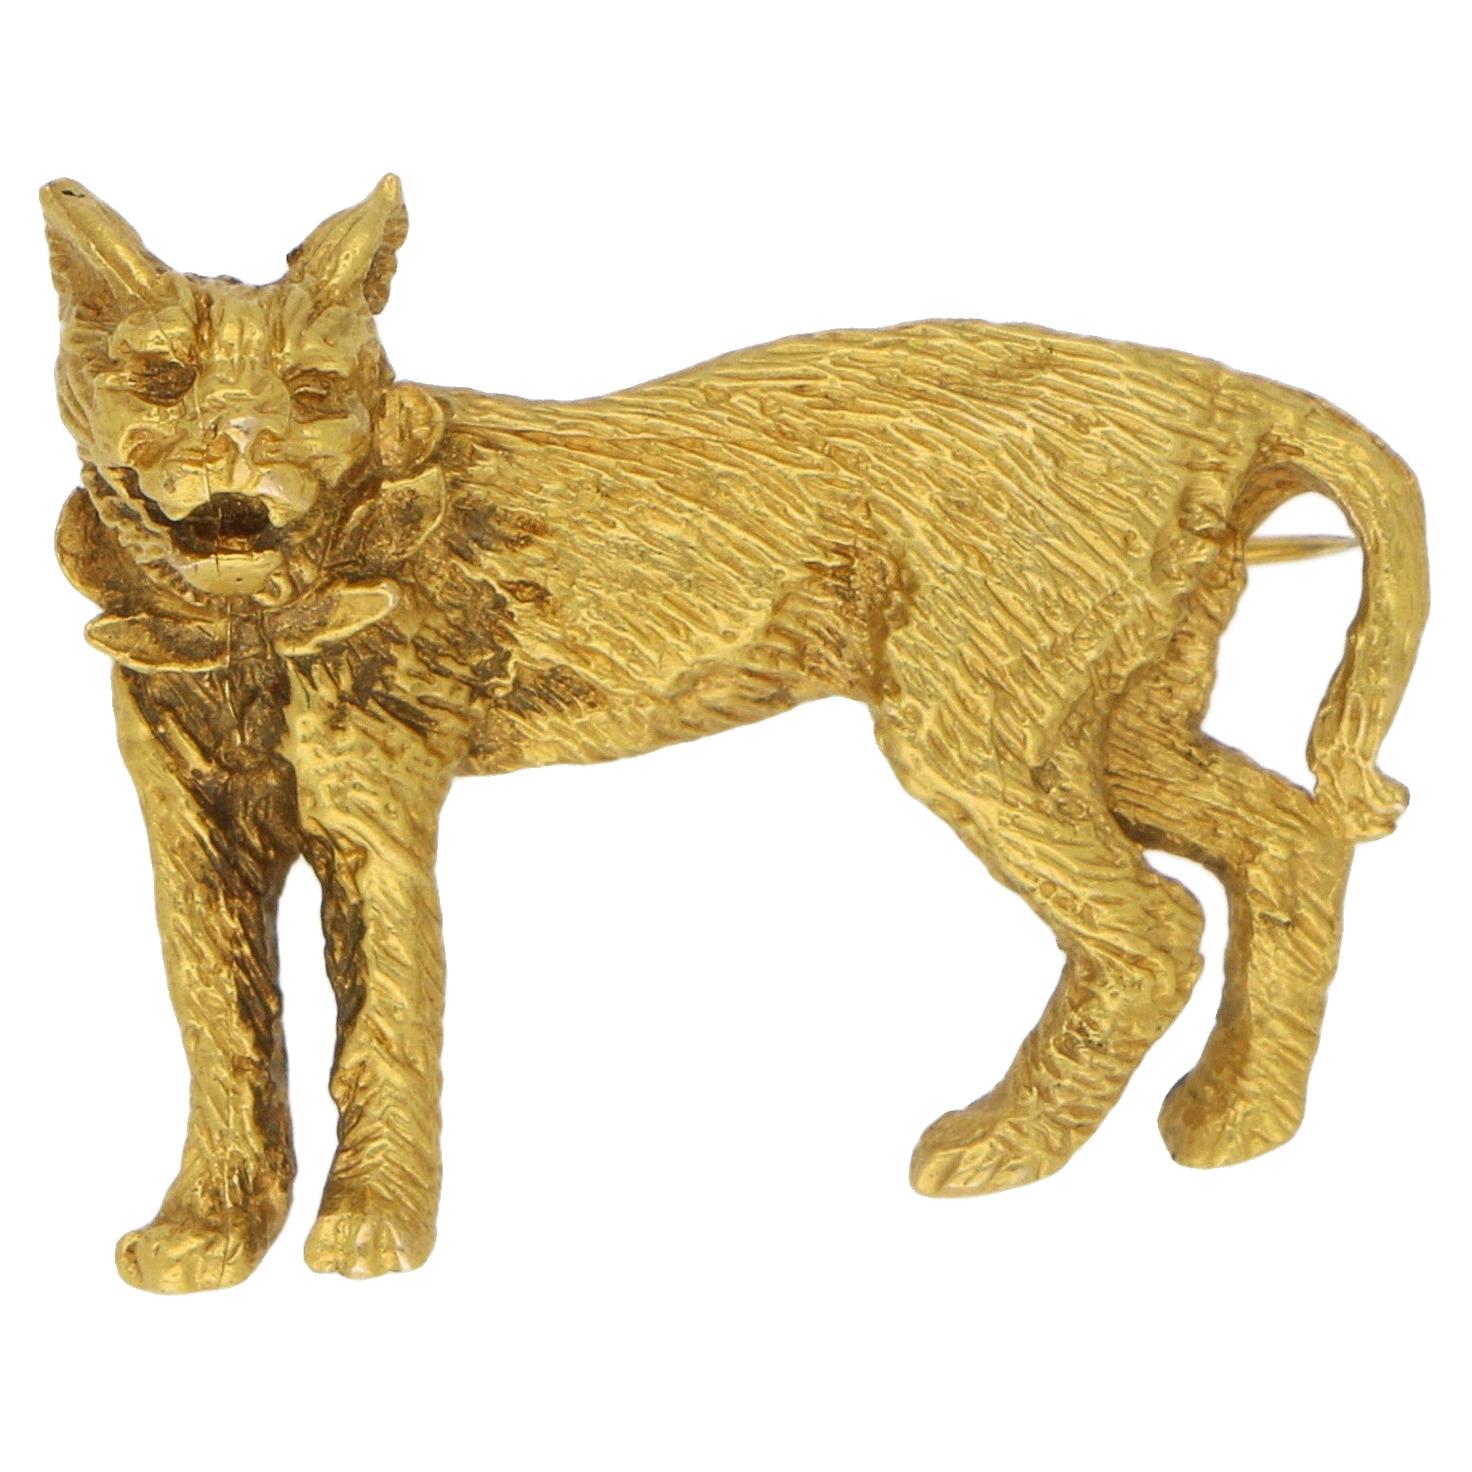 Lynx Cat Brooch Set in Solid 9 Karat Yellow Gold